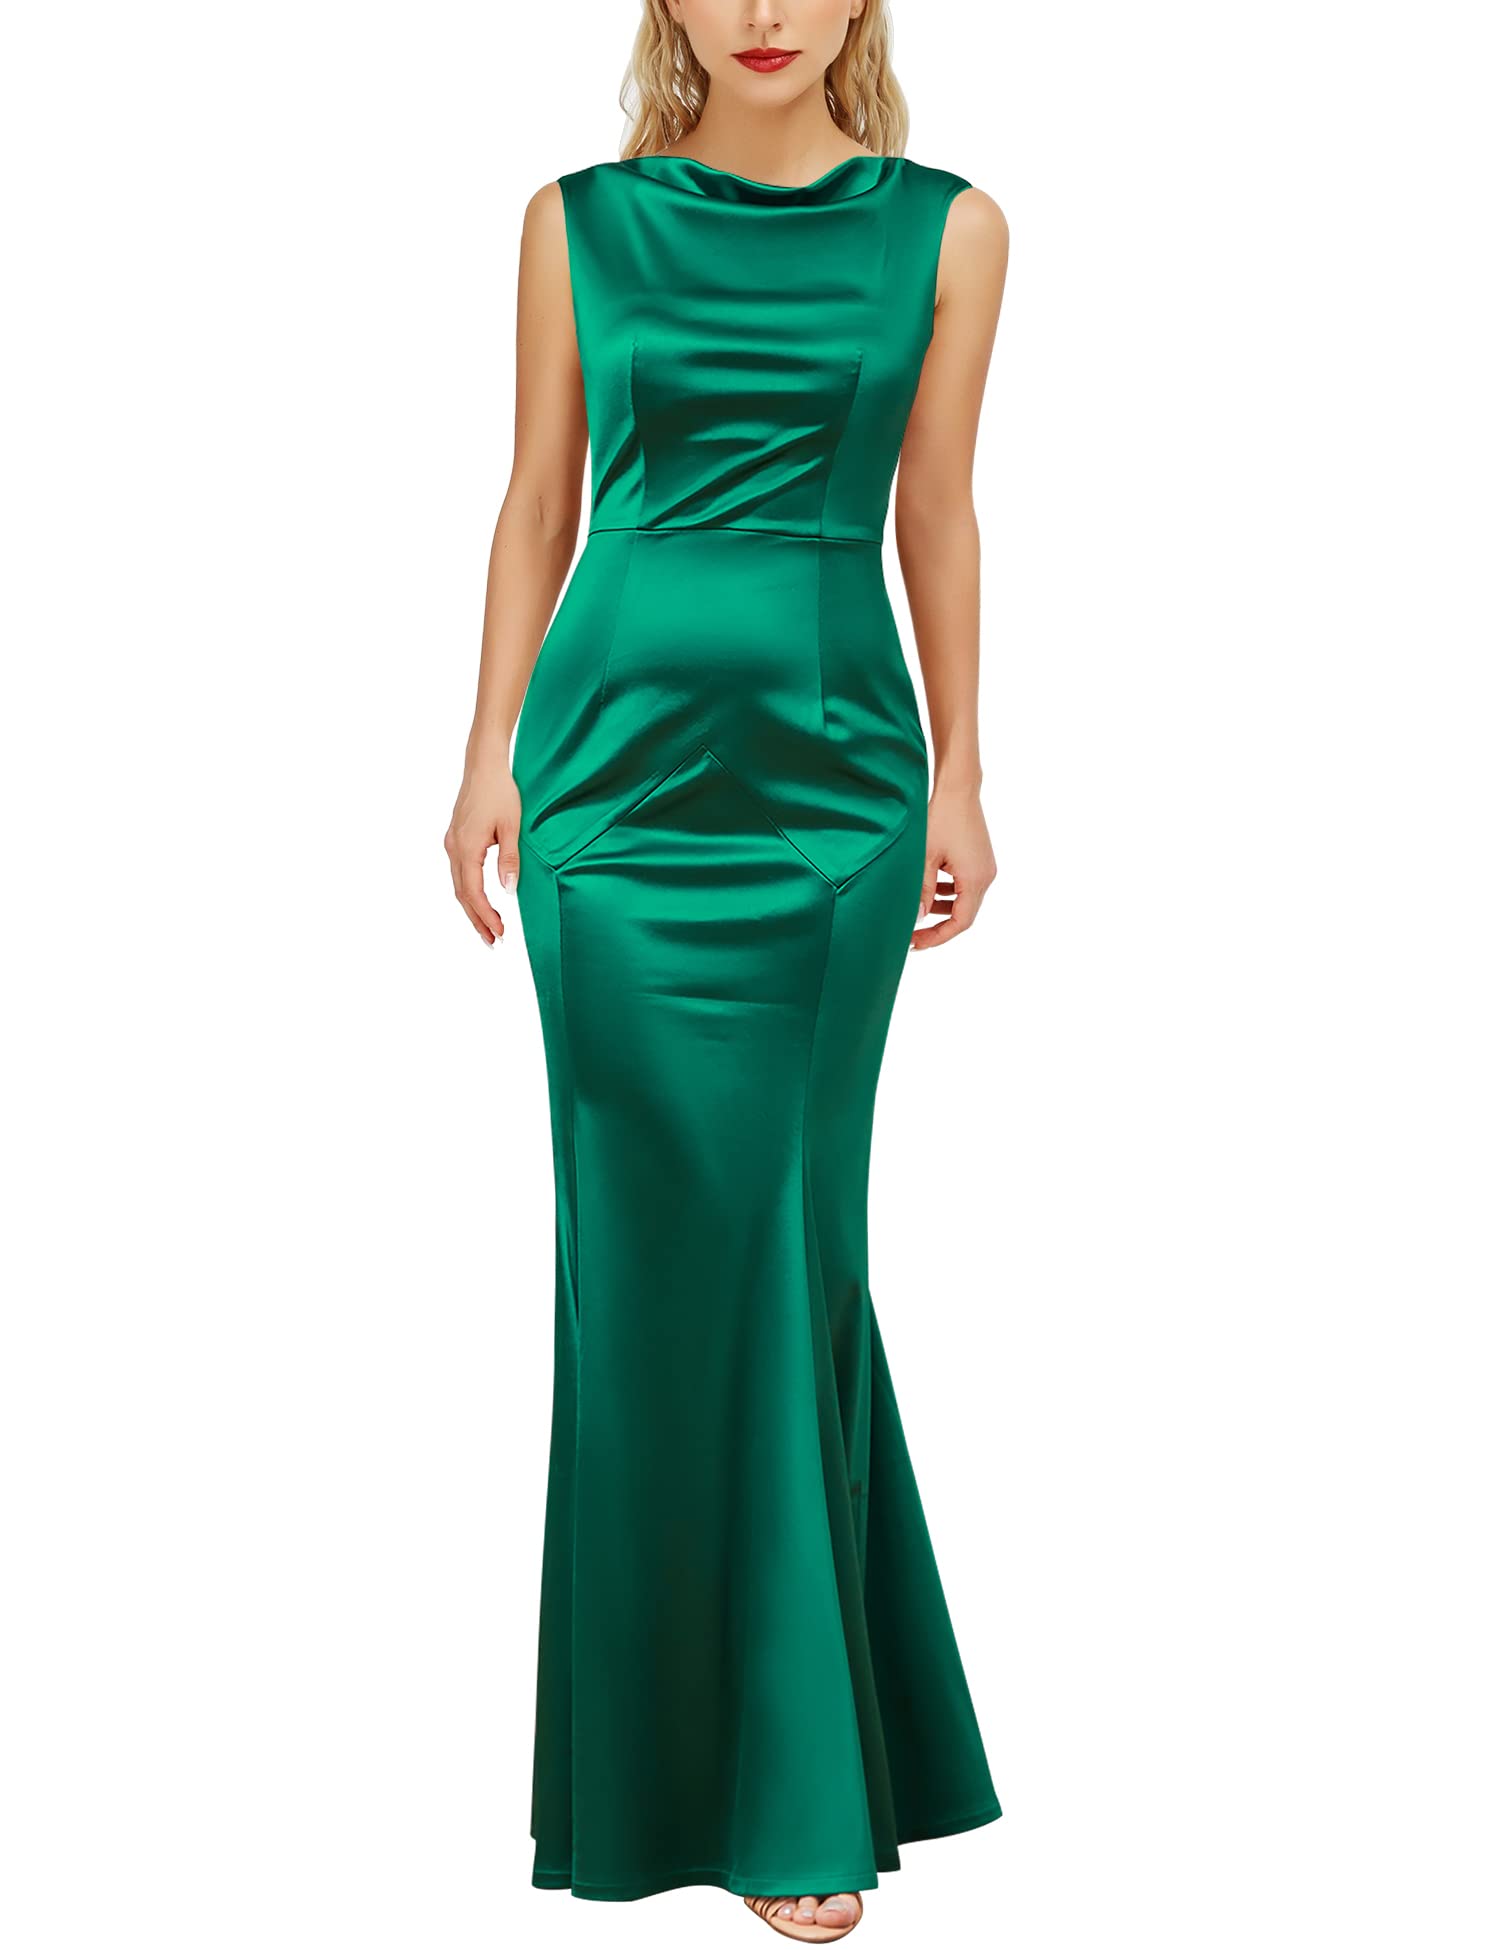 MUXXN Women's 30s Brief Elegant Mermaid Evening Dress